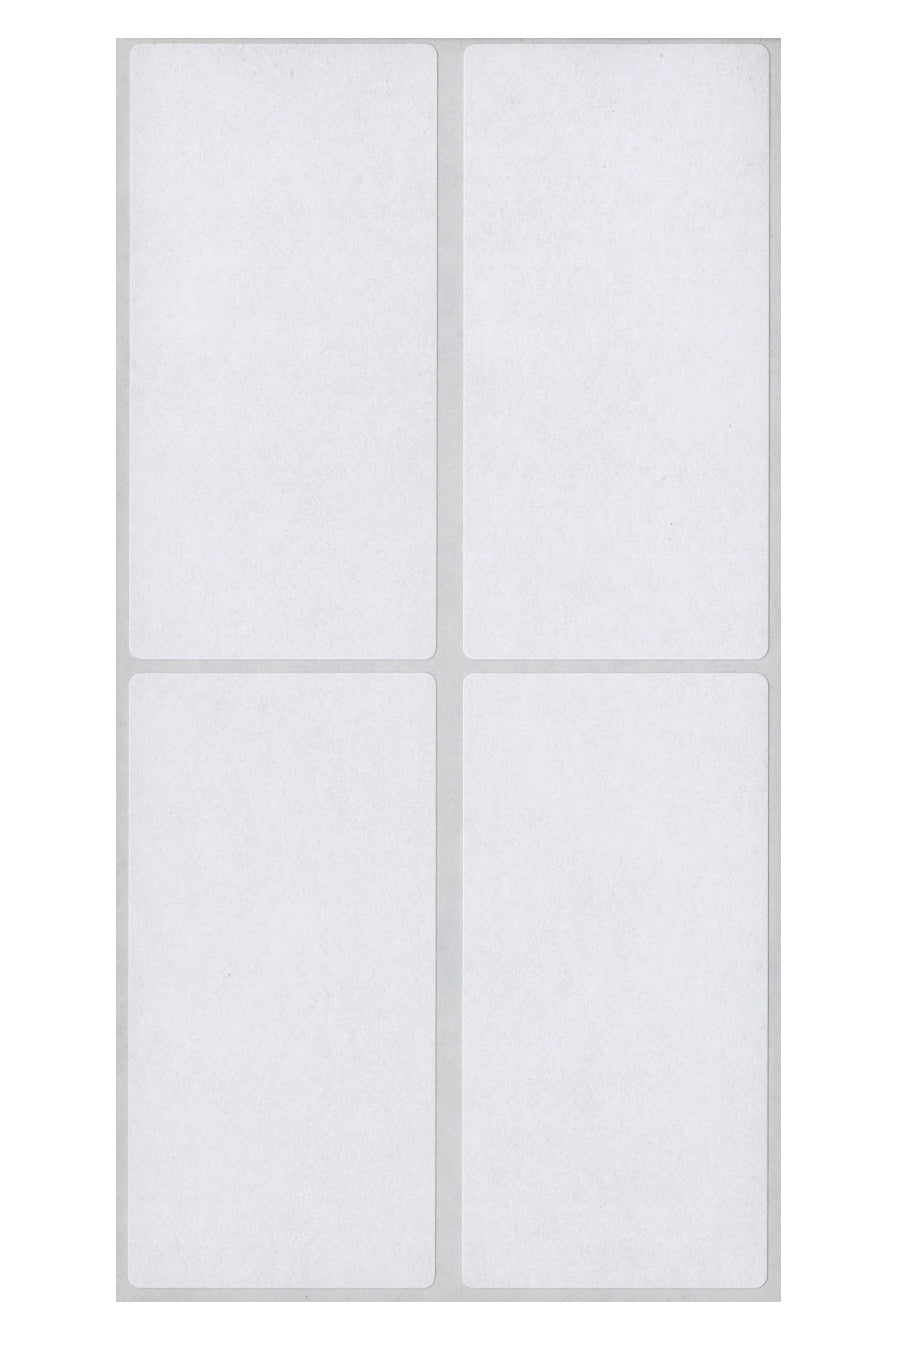 White Multi-Purpose Labels, 1-1/2" x 3", Rectangle, 160/Bx